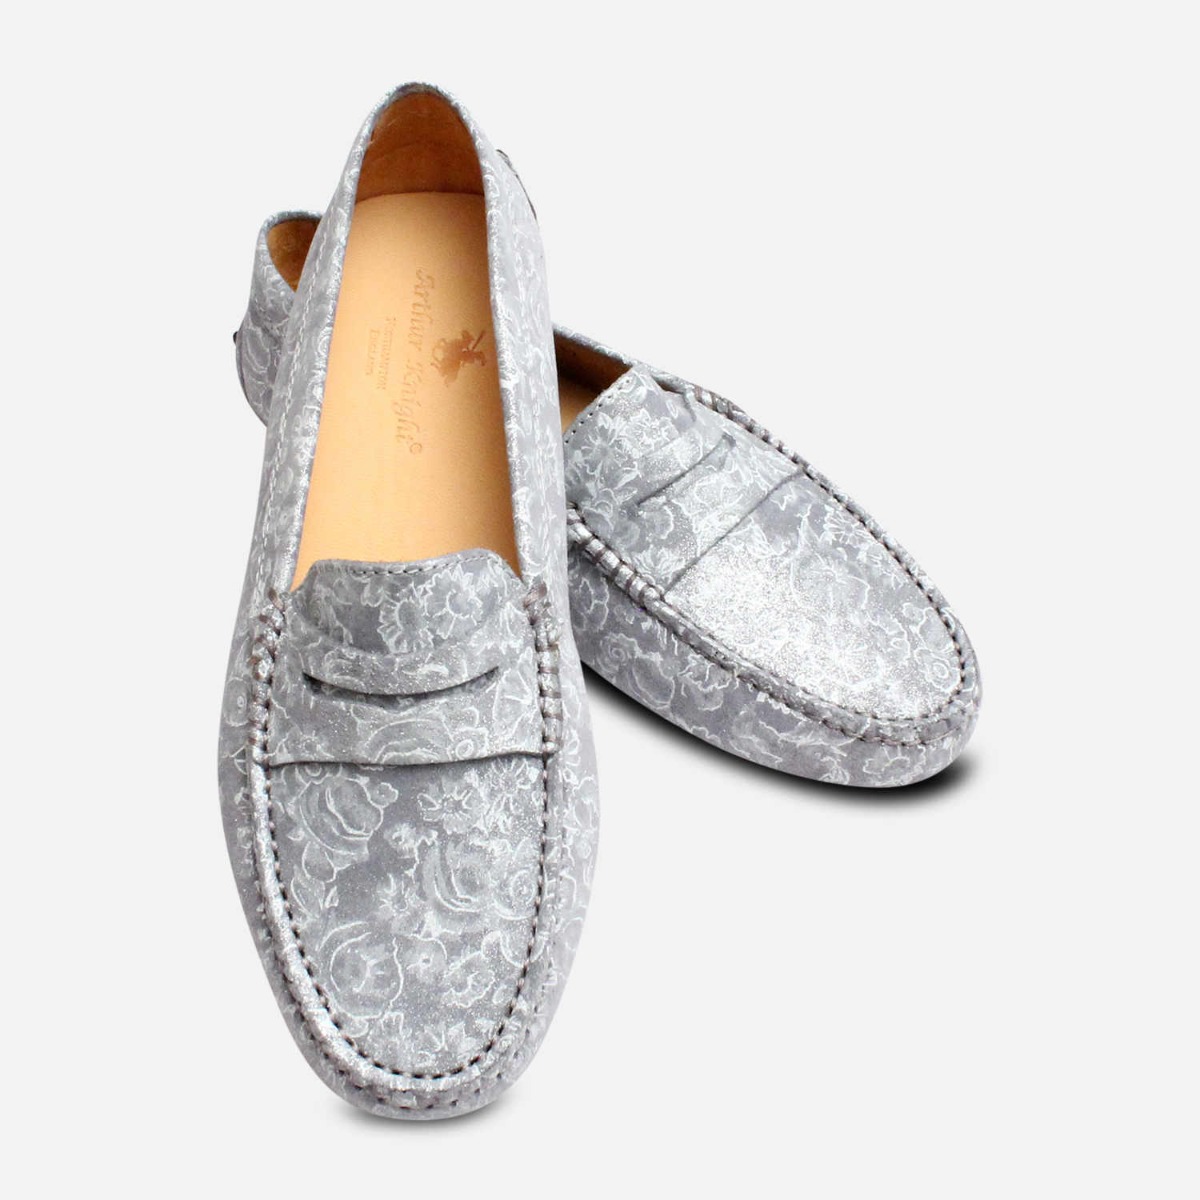 Damen Silber Blume Italienische Fahren Schuhe Mokassins Ebay